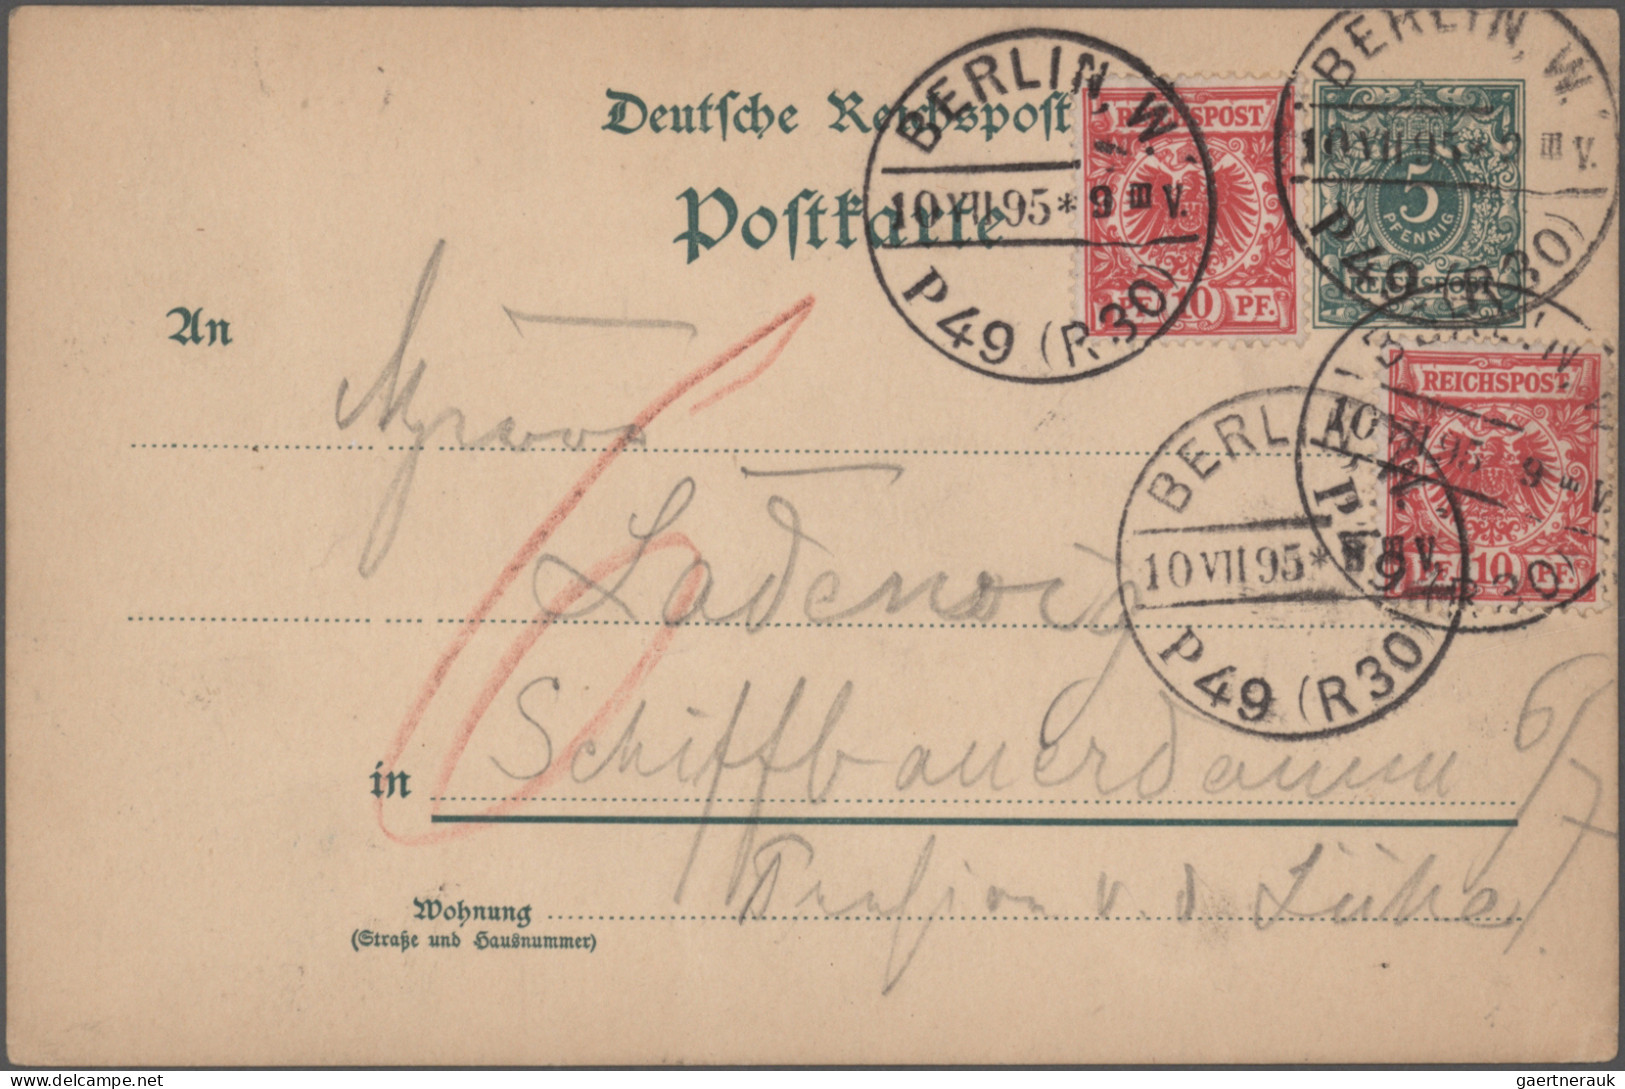 Berlin - Rohrpost: 1879/1960, saubere Spezial-Sammlung mit ca. 130 Rohrpost-Bele